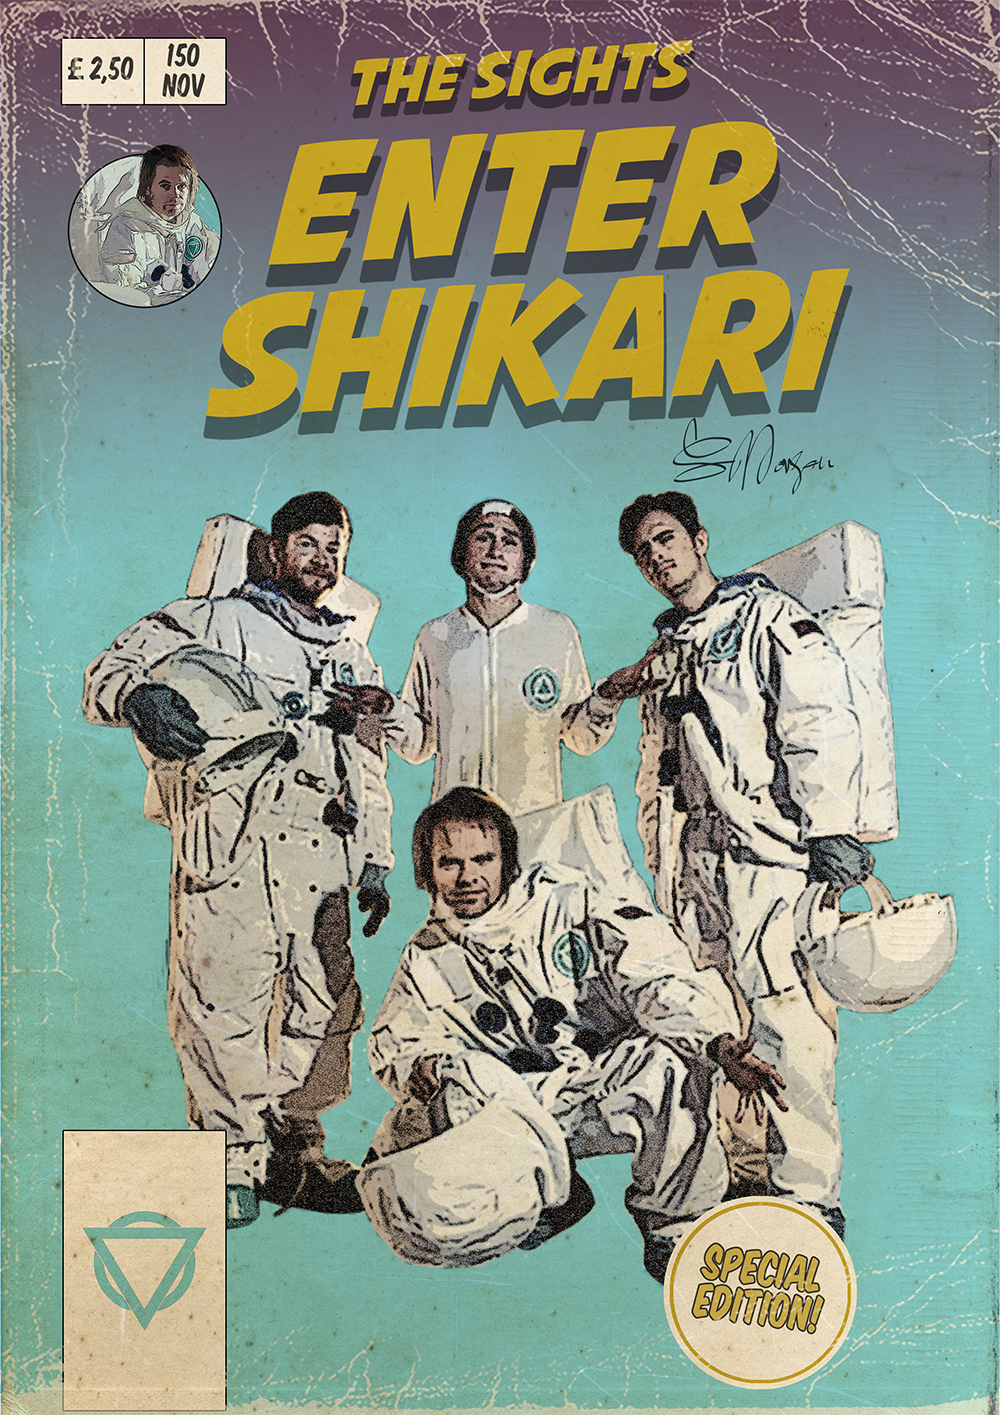 COVER COMIC BOOK Comic Book Adobe Photoshop Enter Shikari Space  Space man adpobe photoshop photoshop Mockup vintage